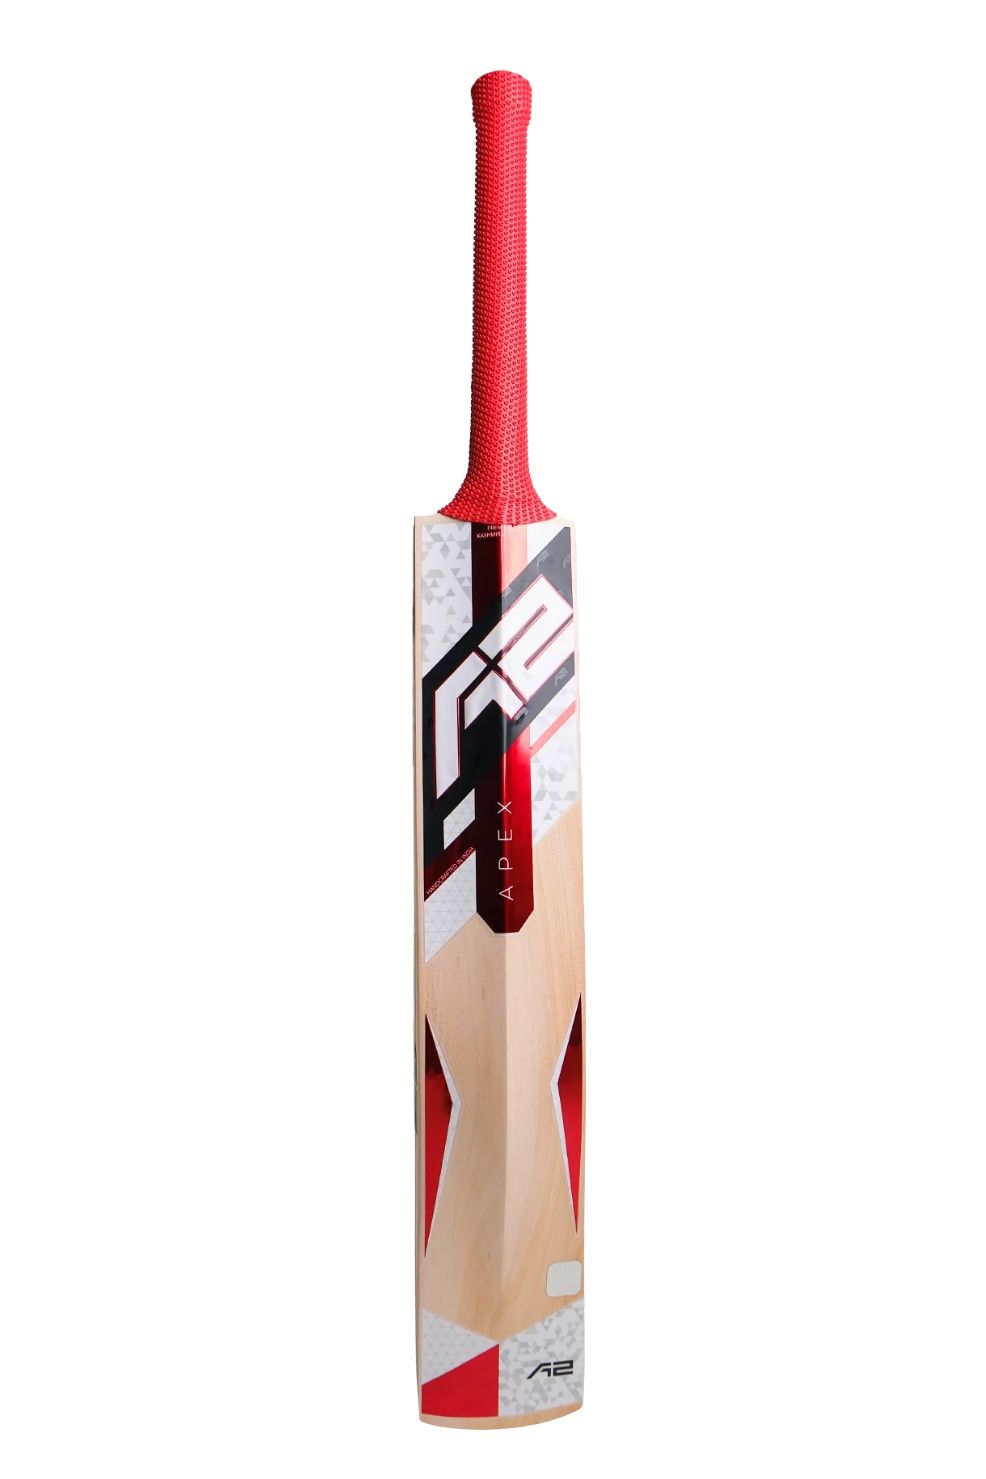 Apex Kashmir Willow Cricket Bat - CBP Lite